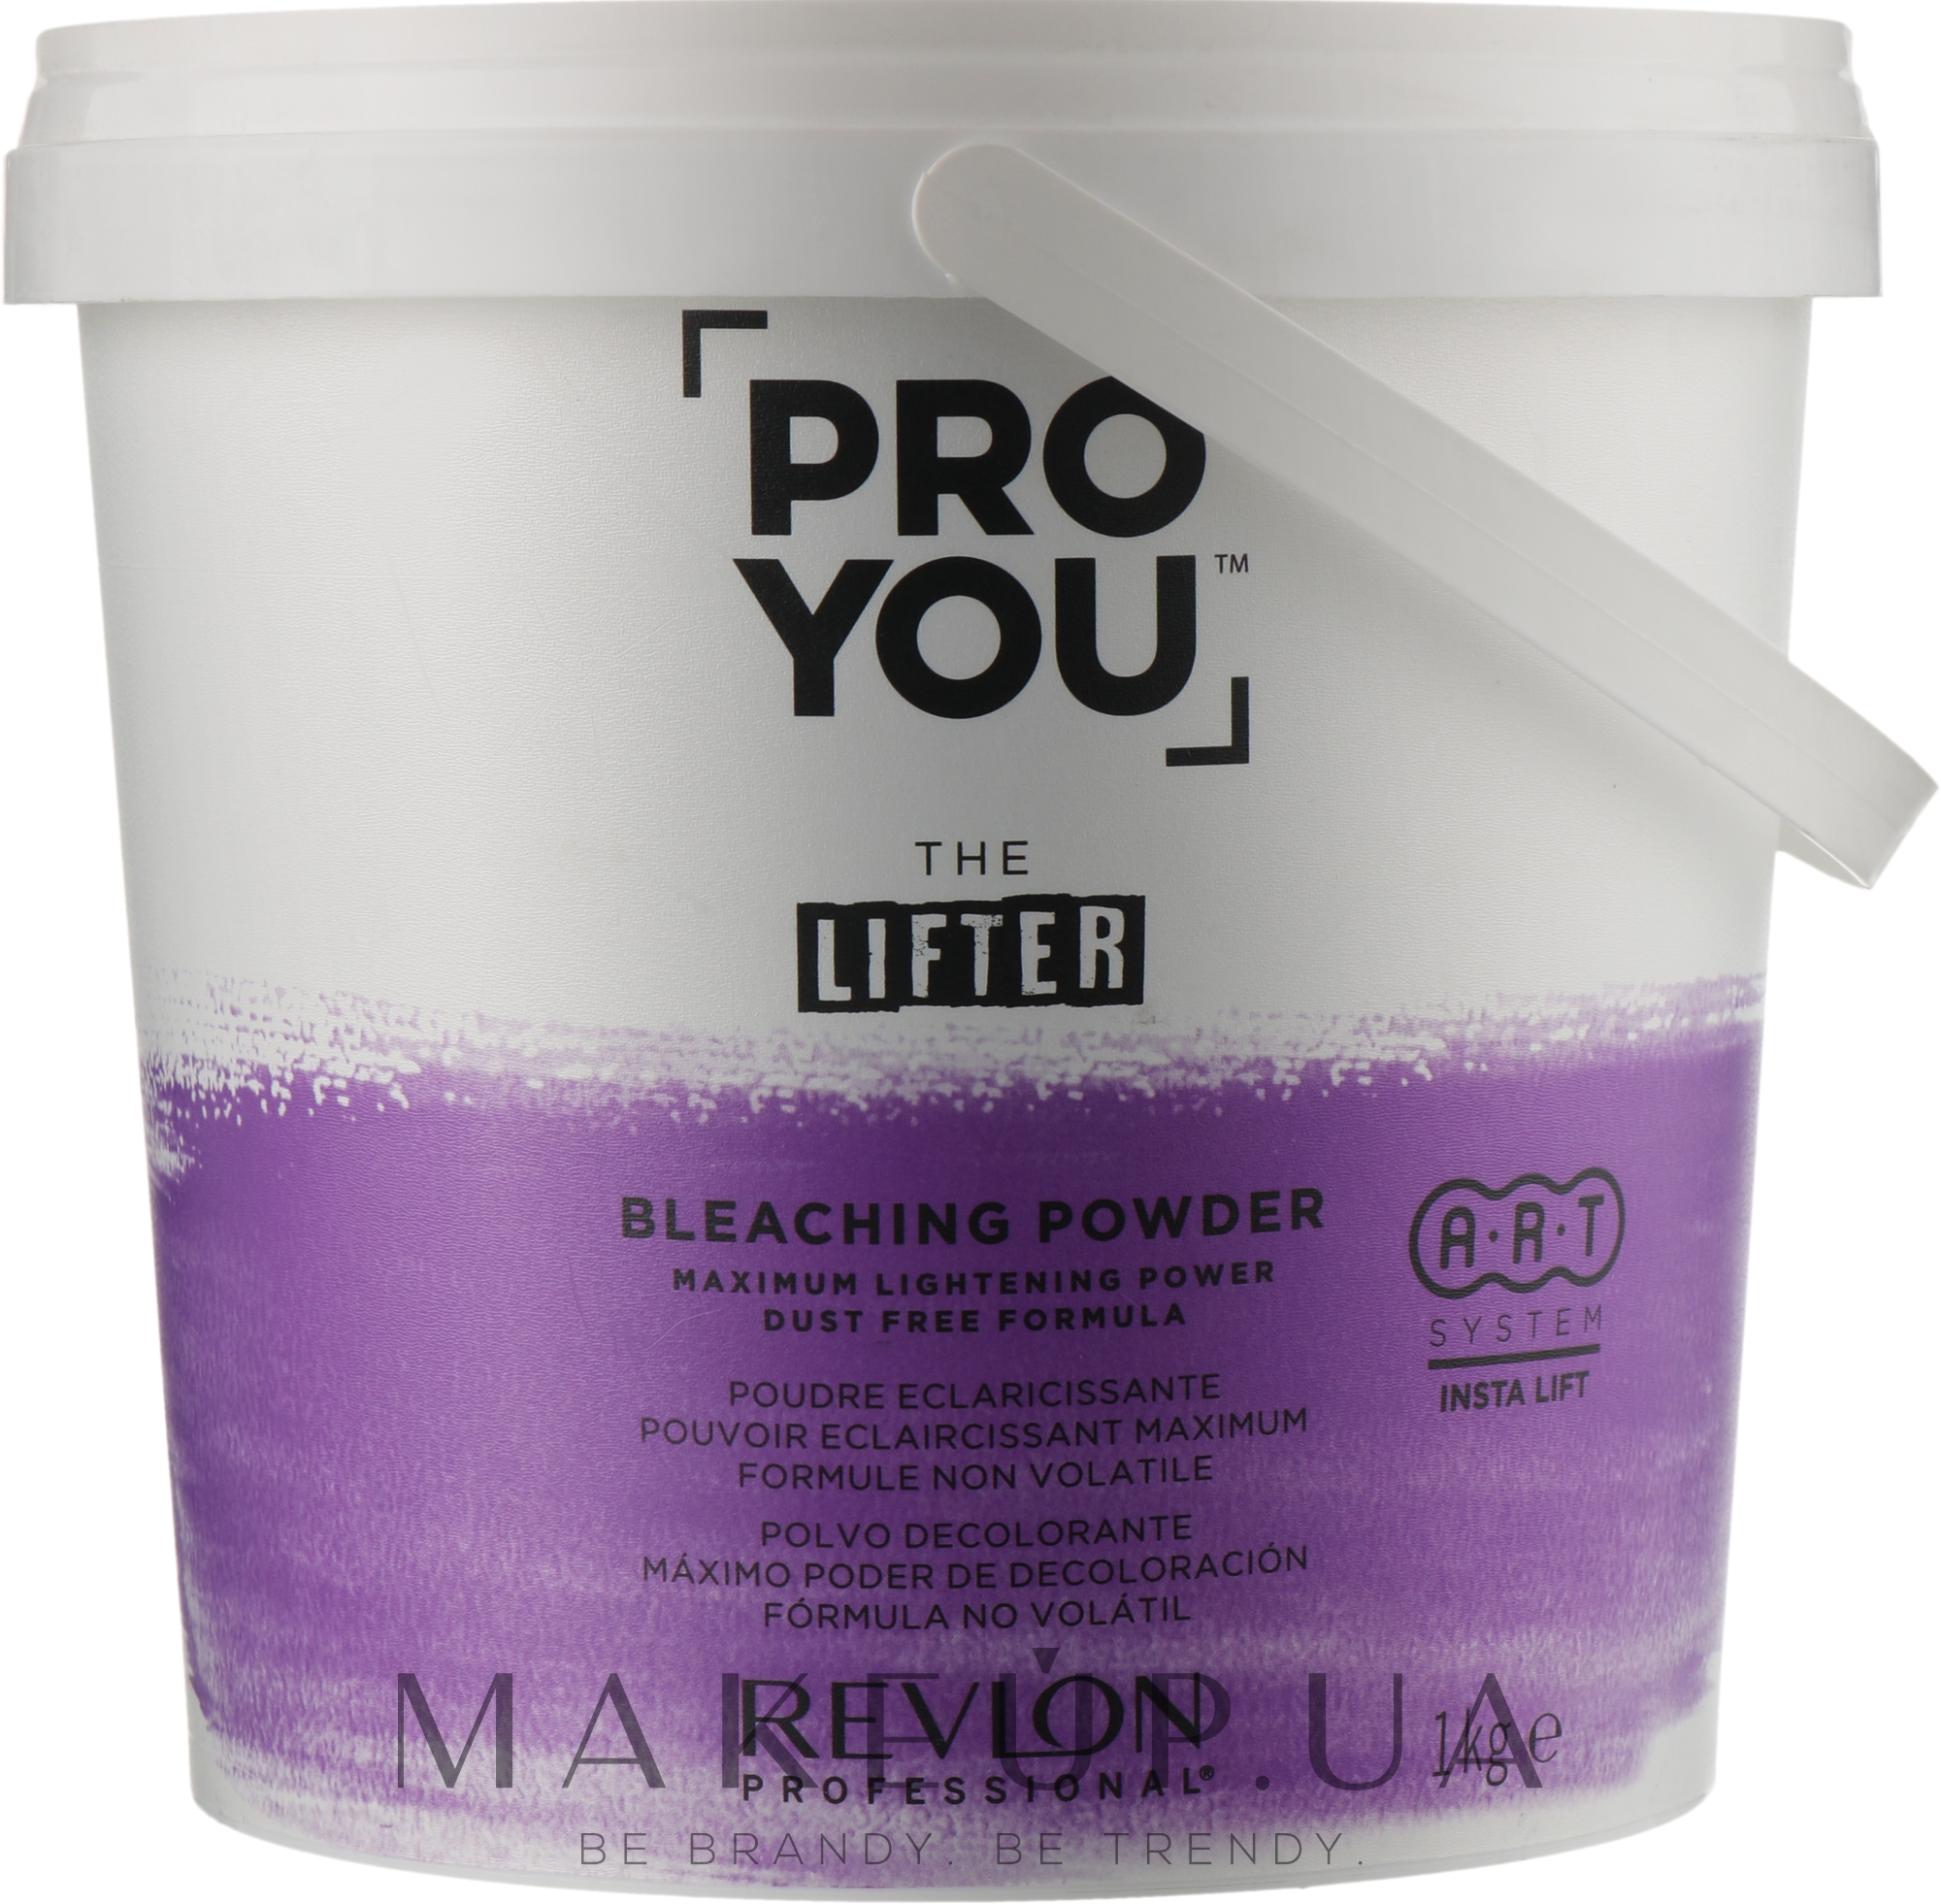 Освітлювальна пудра для волосся - Revlon Professional Pro You The Lifter Bleaching Powder — фото 1000g